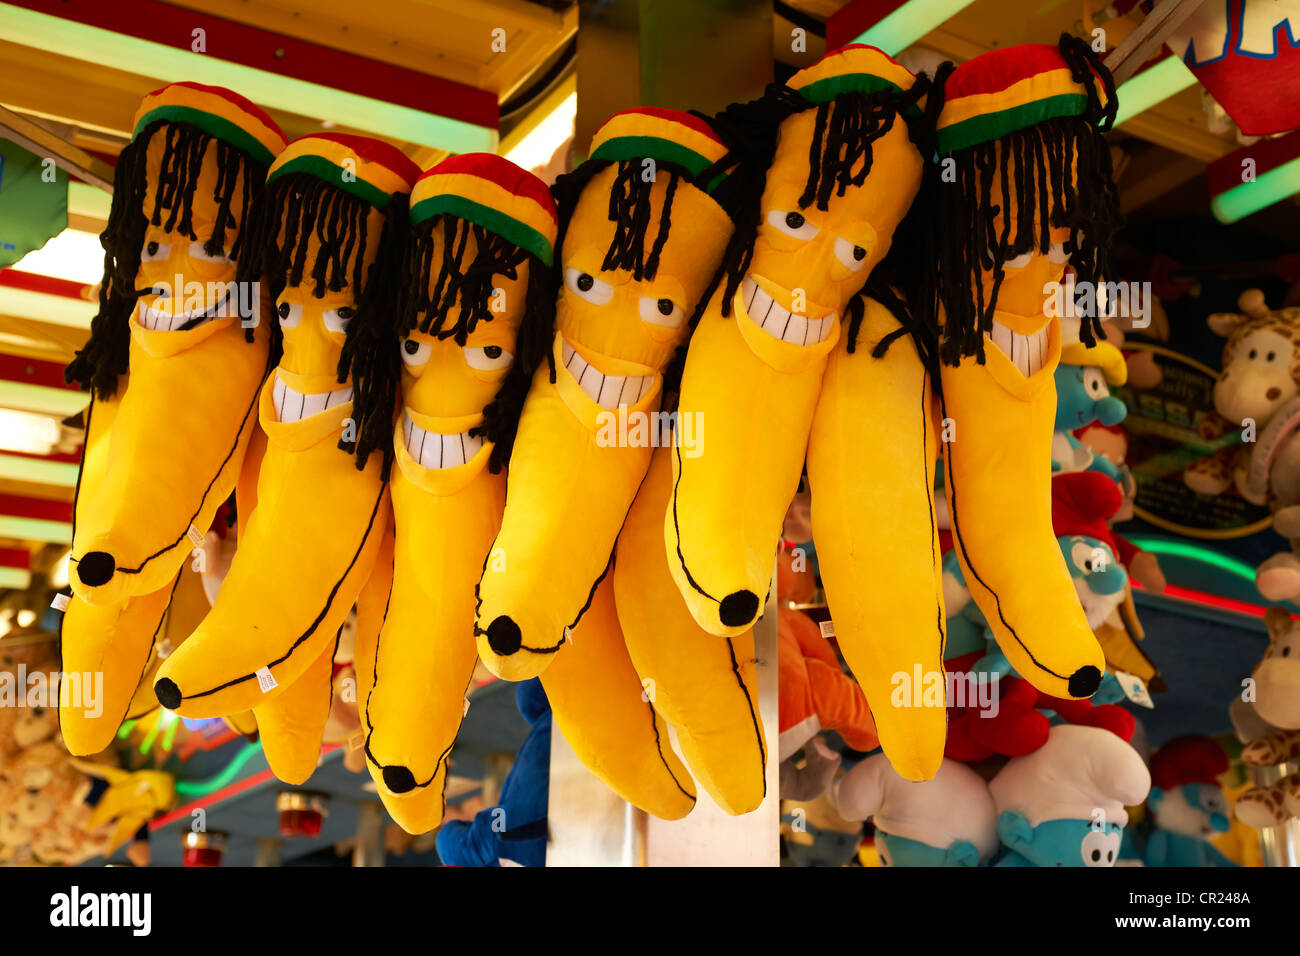 jamaican banana stuffed toy